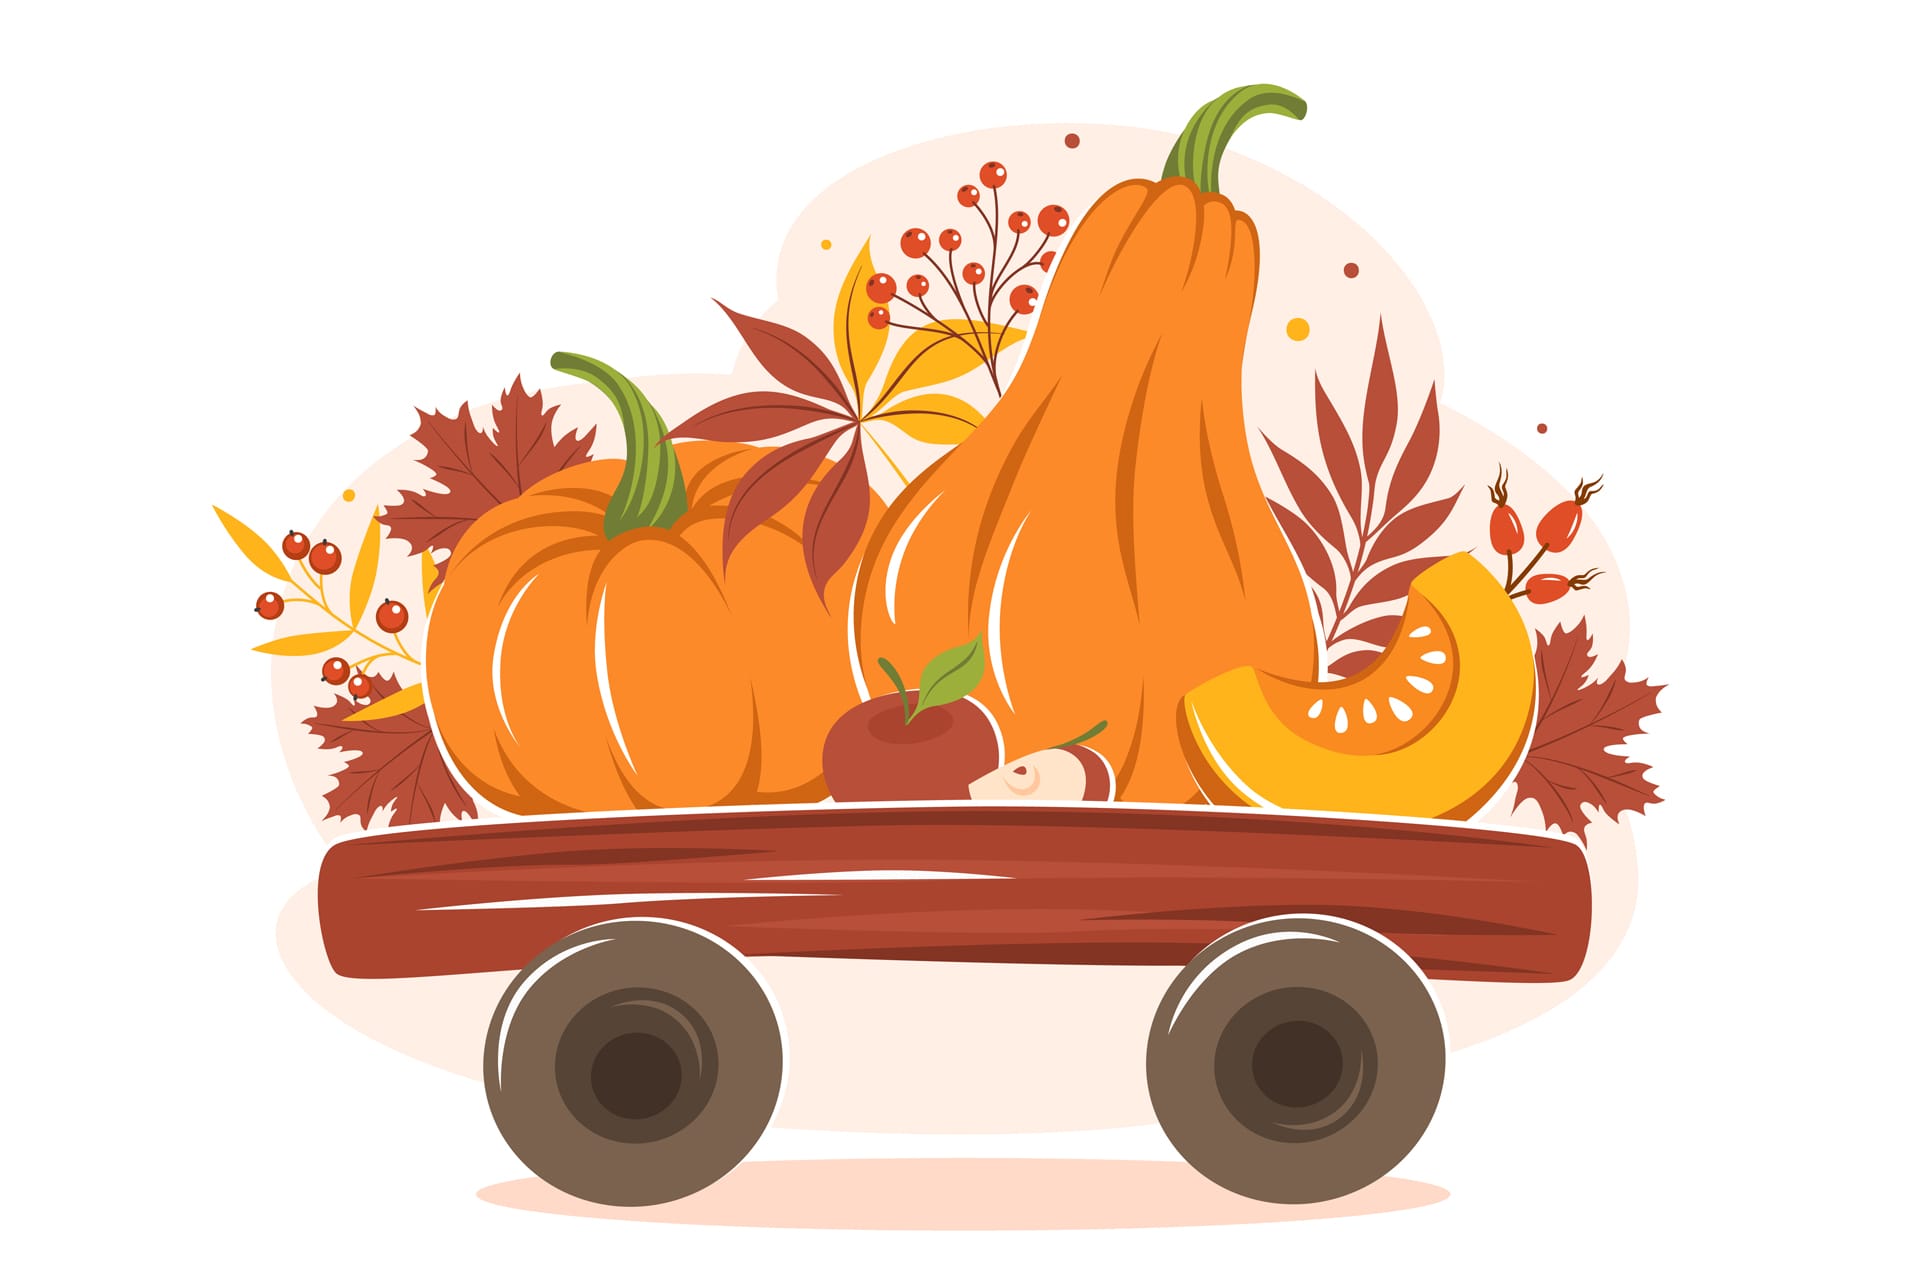 Card design with autumn colorful leaves harvest pumpkin fruit cart